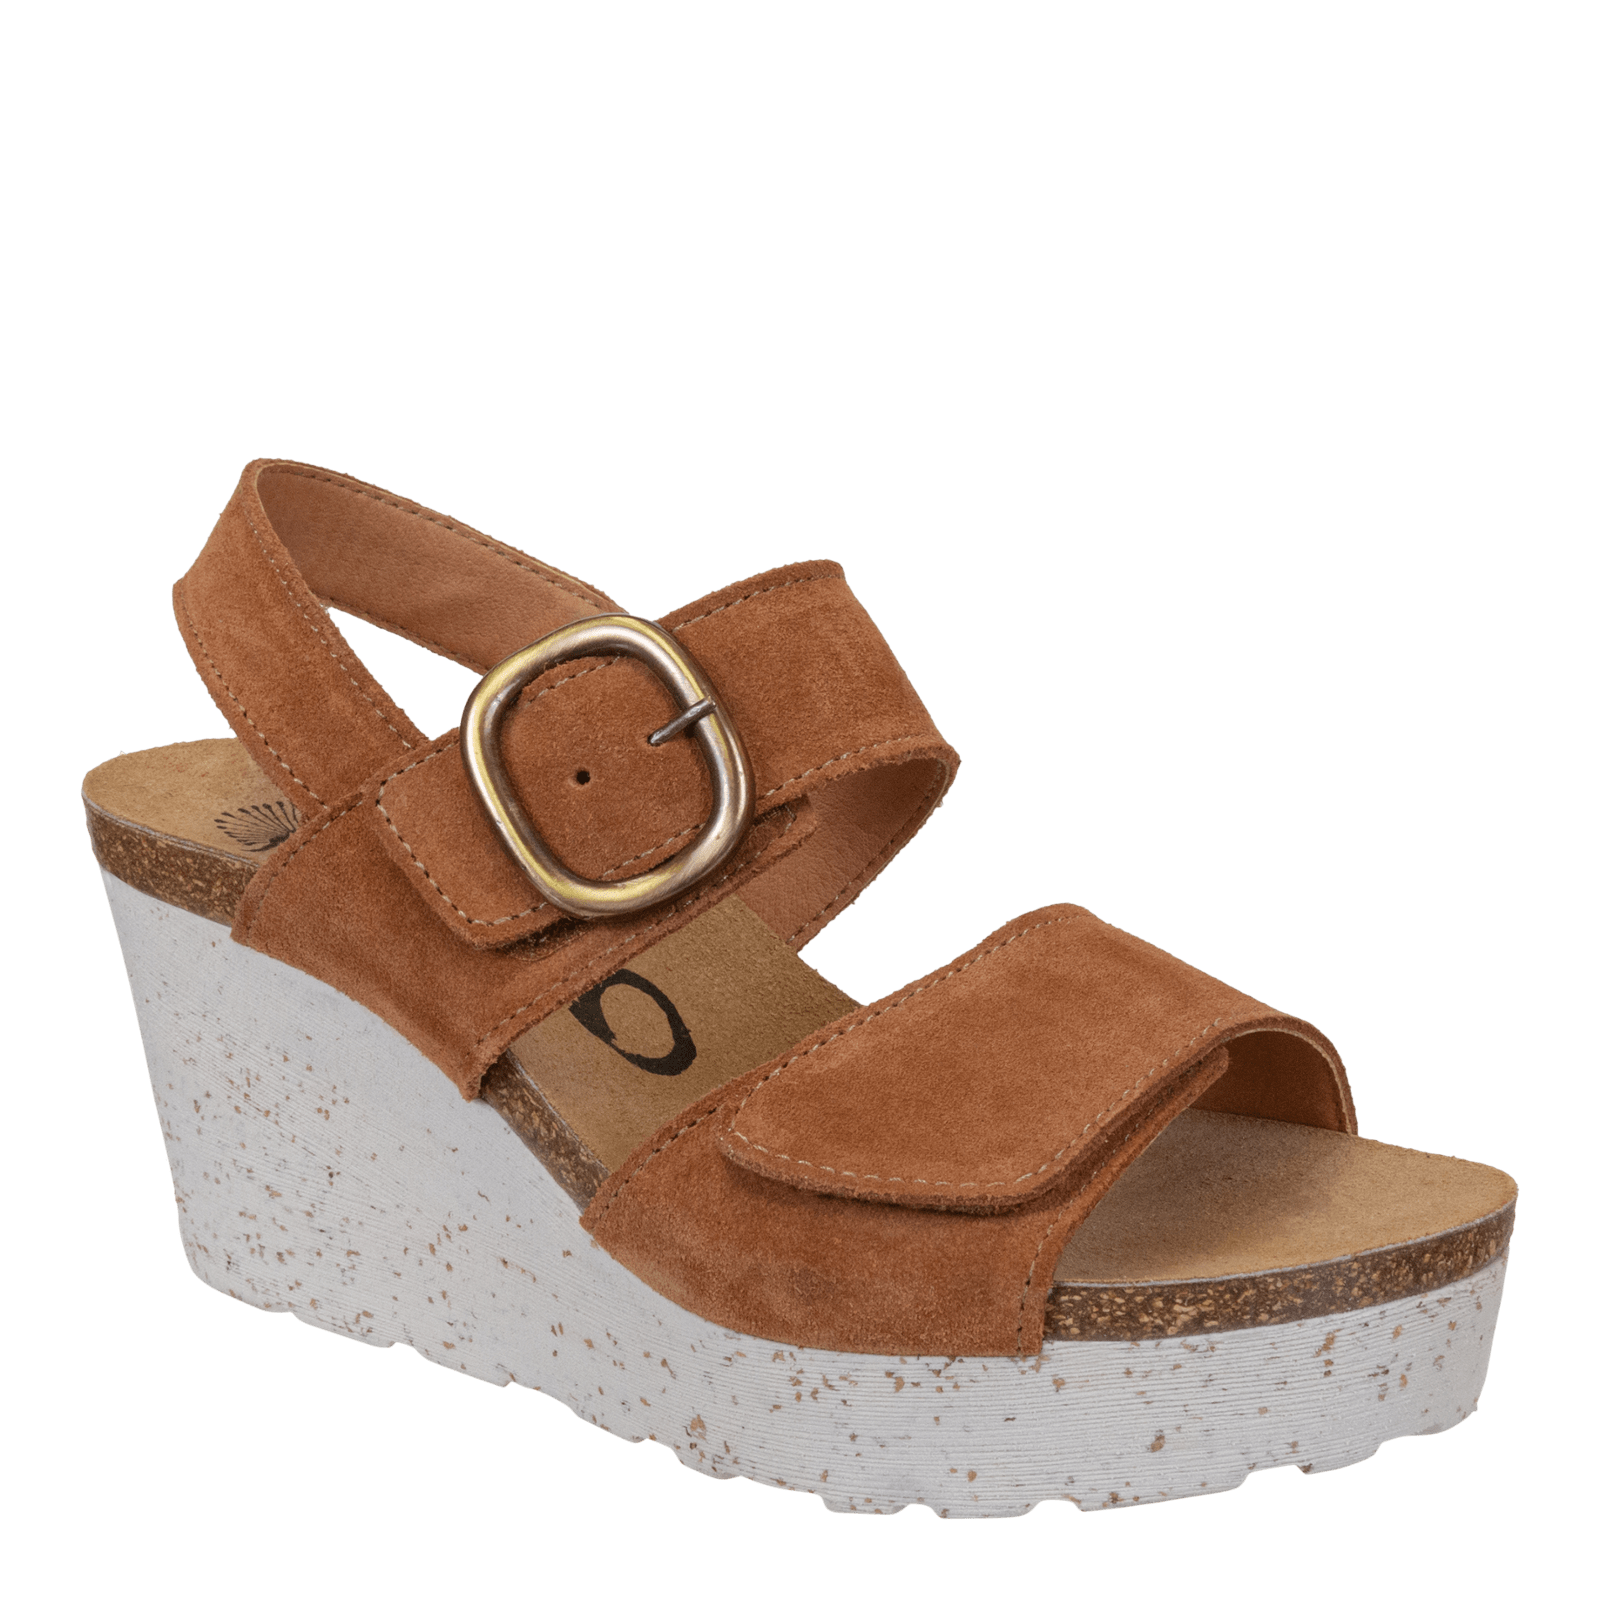 Comfortable Platform Wedge Sandals